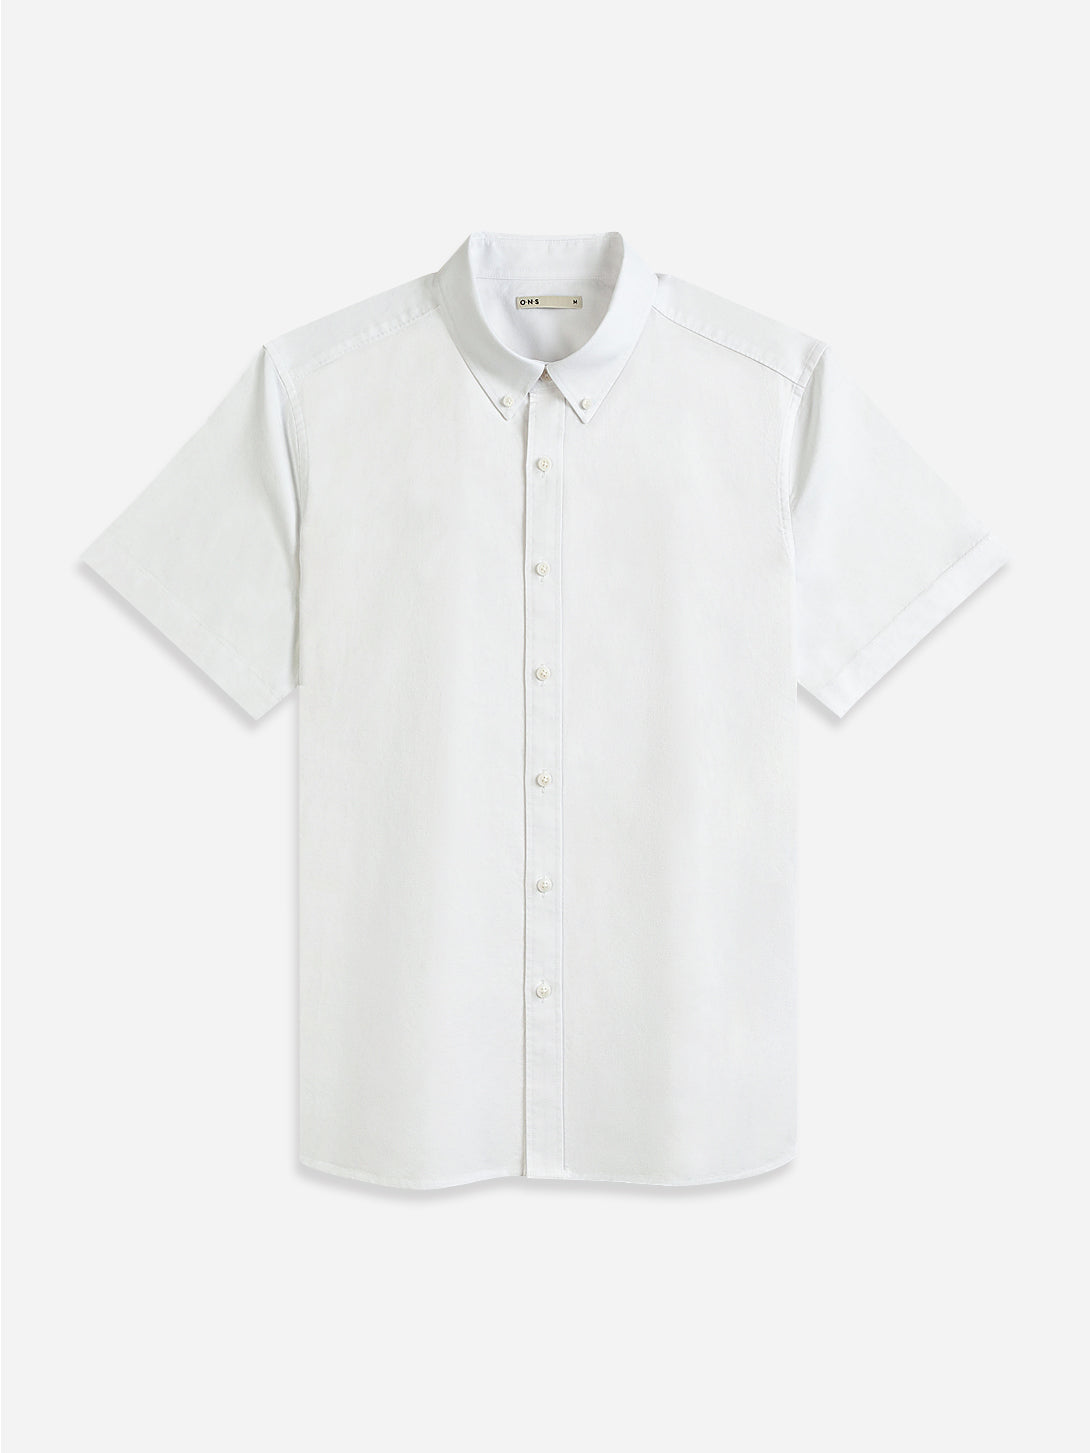 Bright White Fulton Oxford Shirt Mens Button Down Short Sleeve